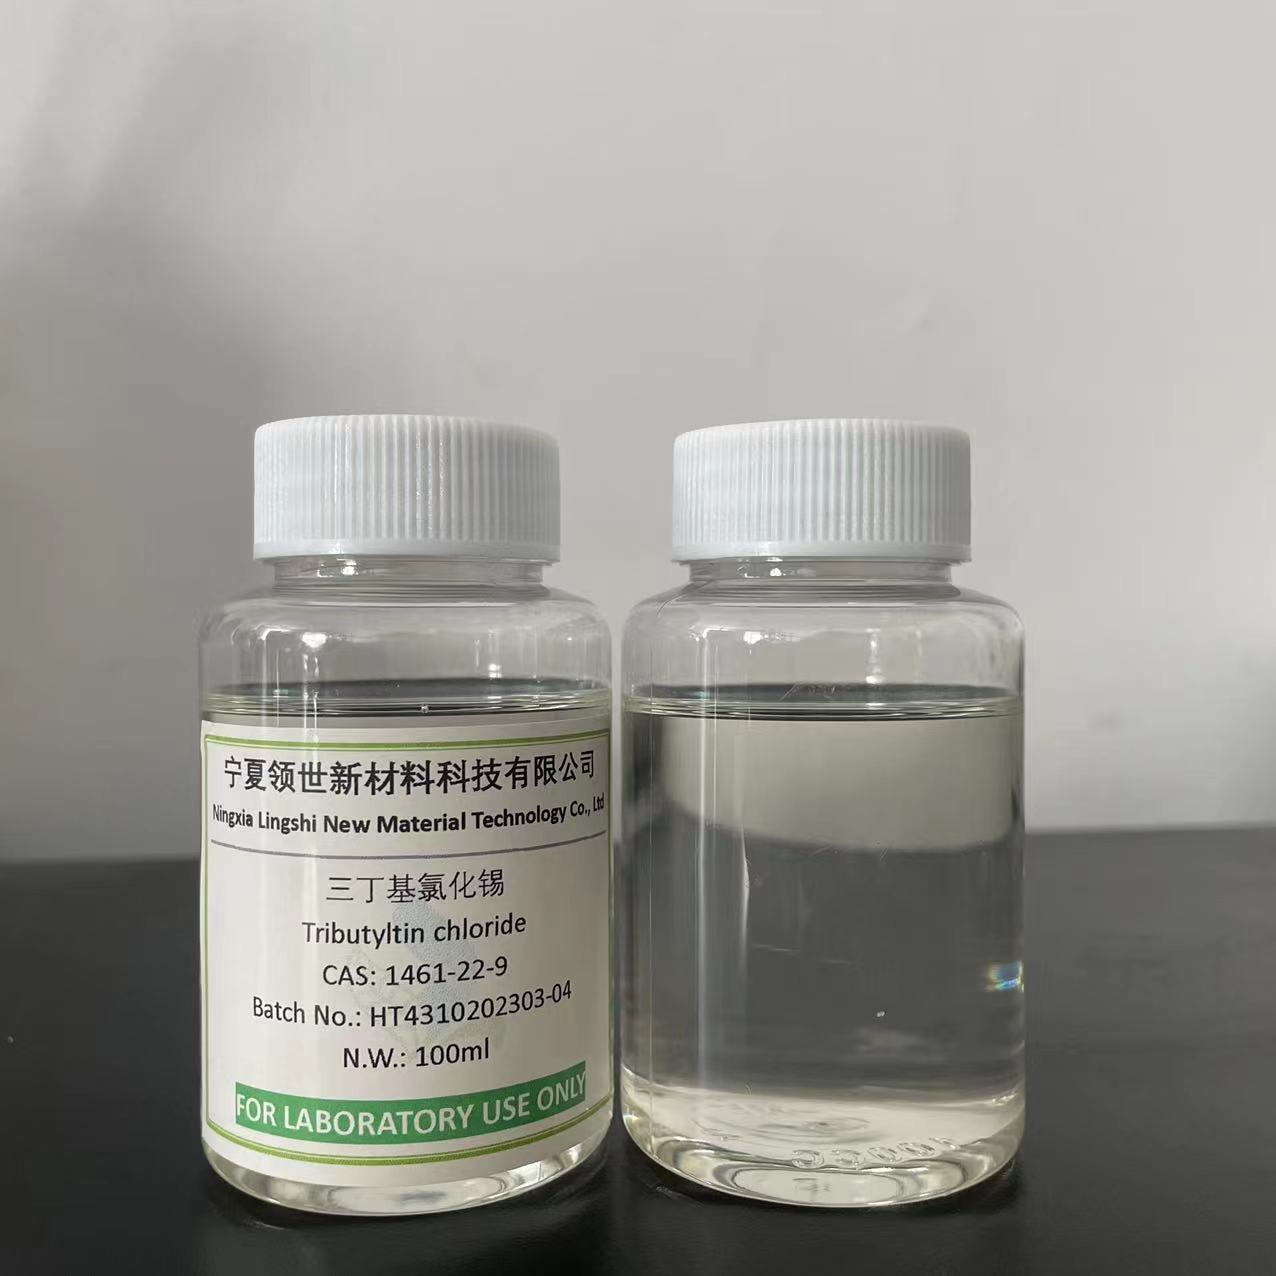 Tributyltin chloride(TBTC)